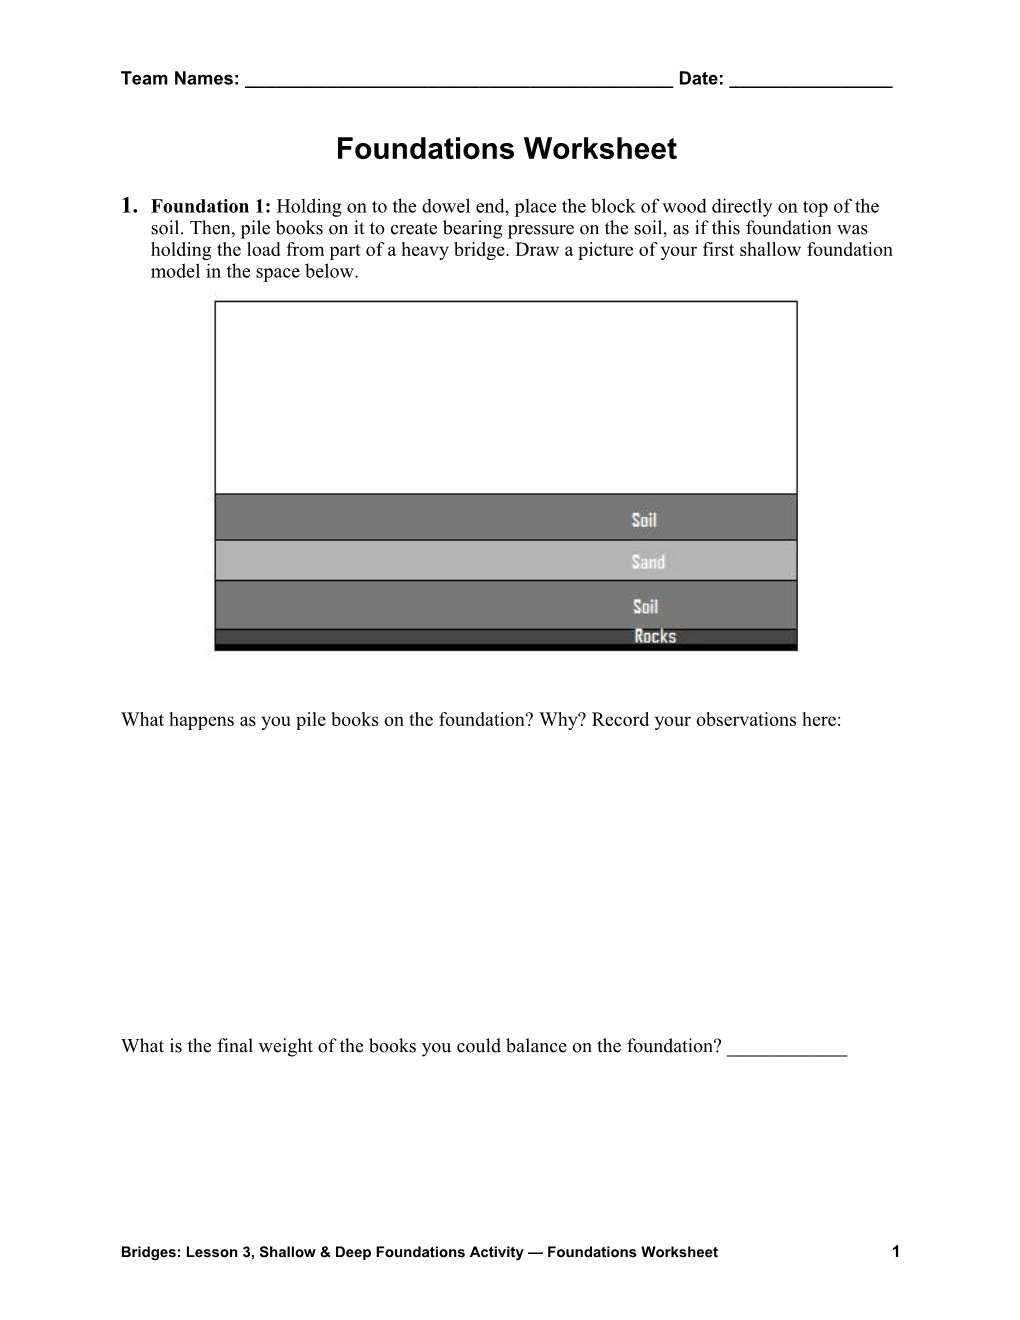 Foundations Worksheet